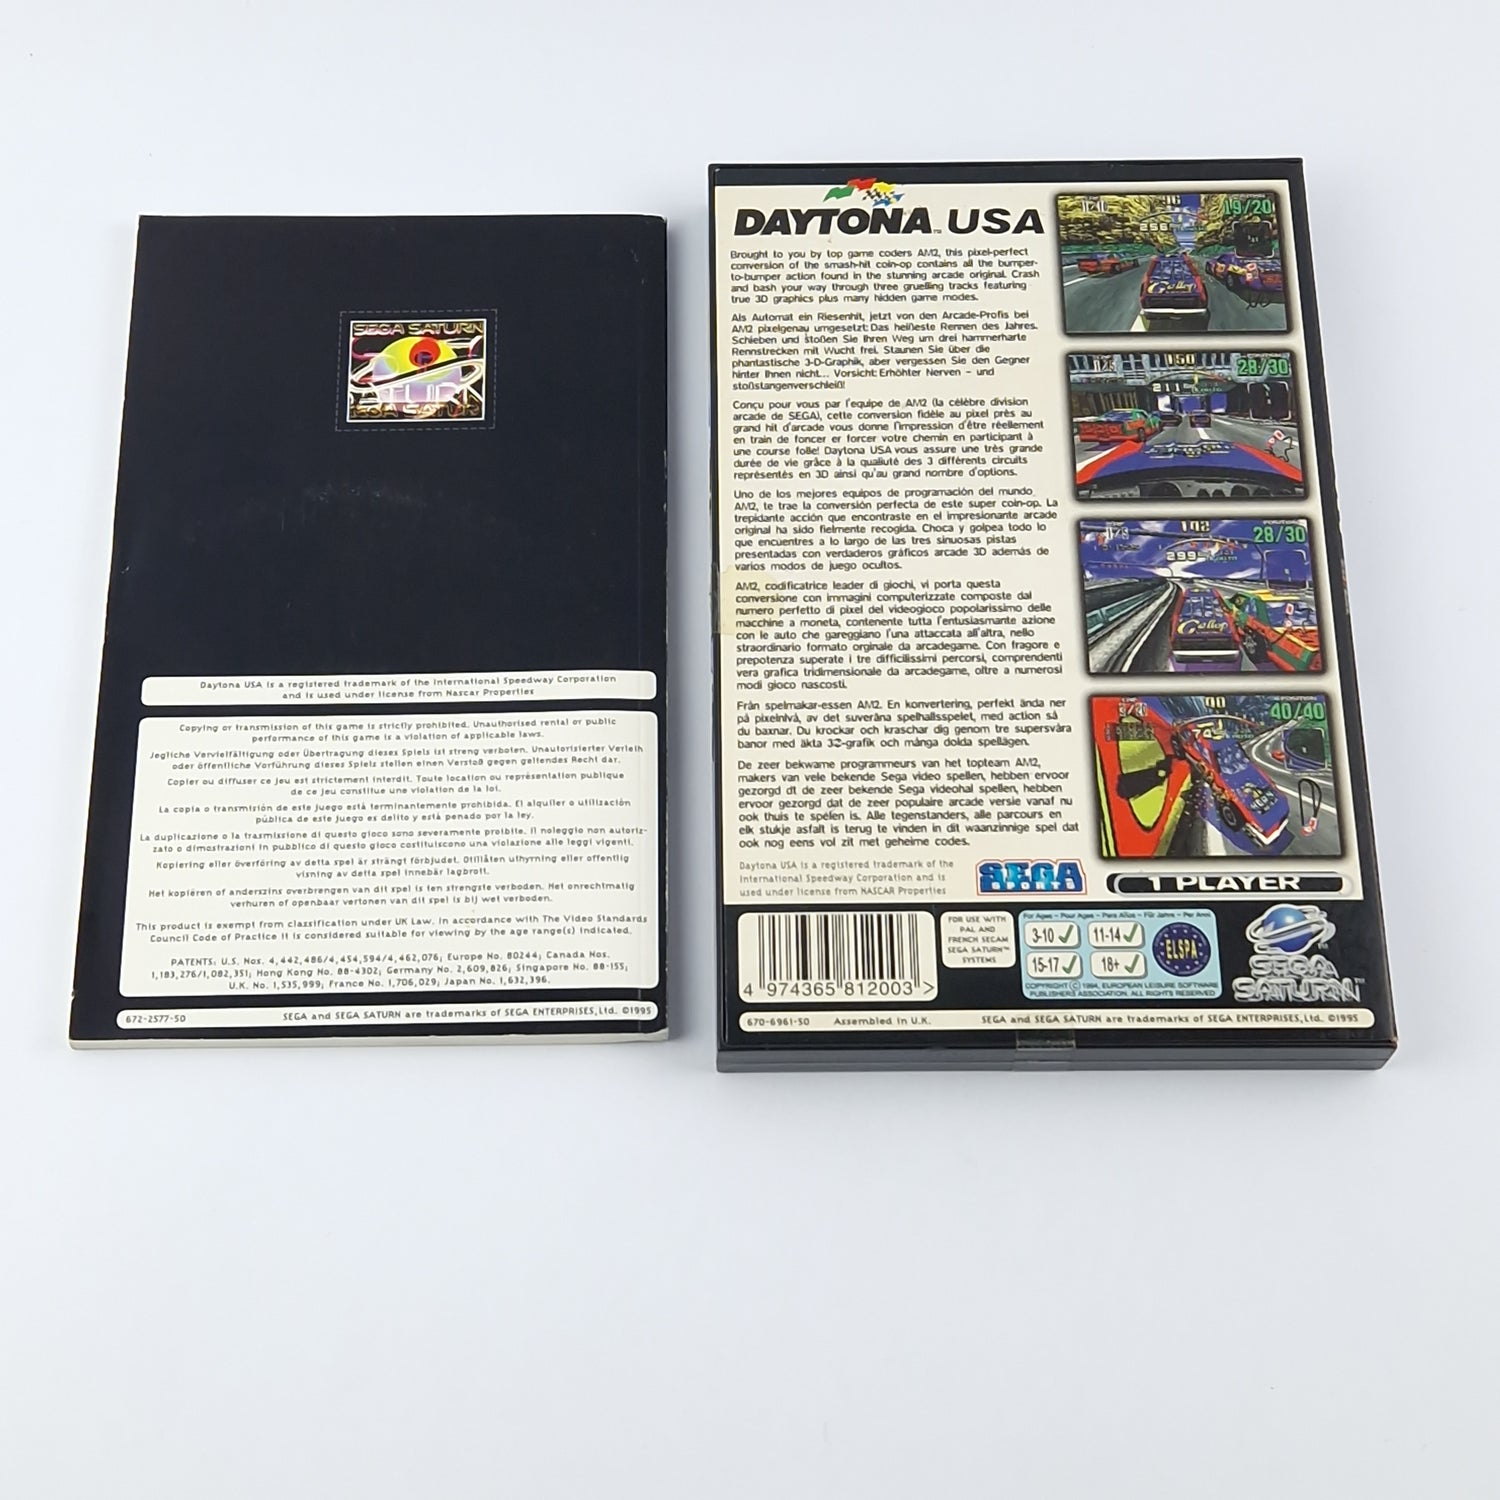 Sega Saturn Game: Daytona USA - OVP Instructions CD PAL Disc Game SEGA Sports